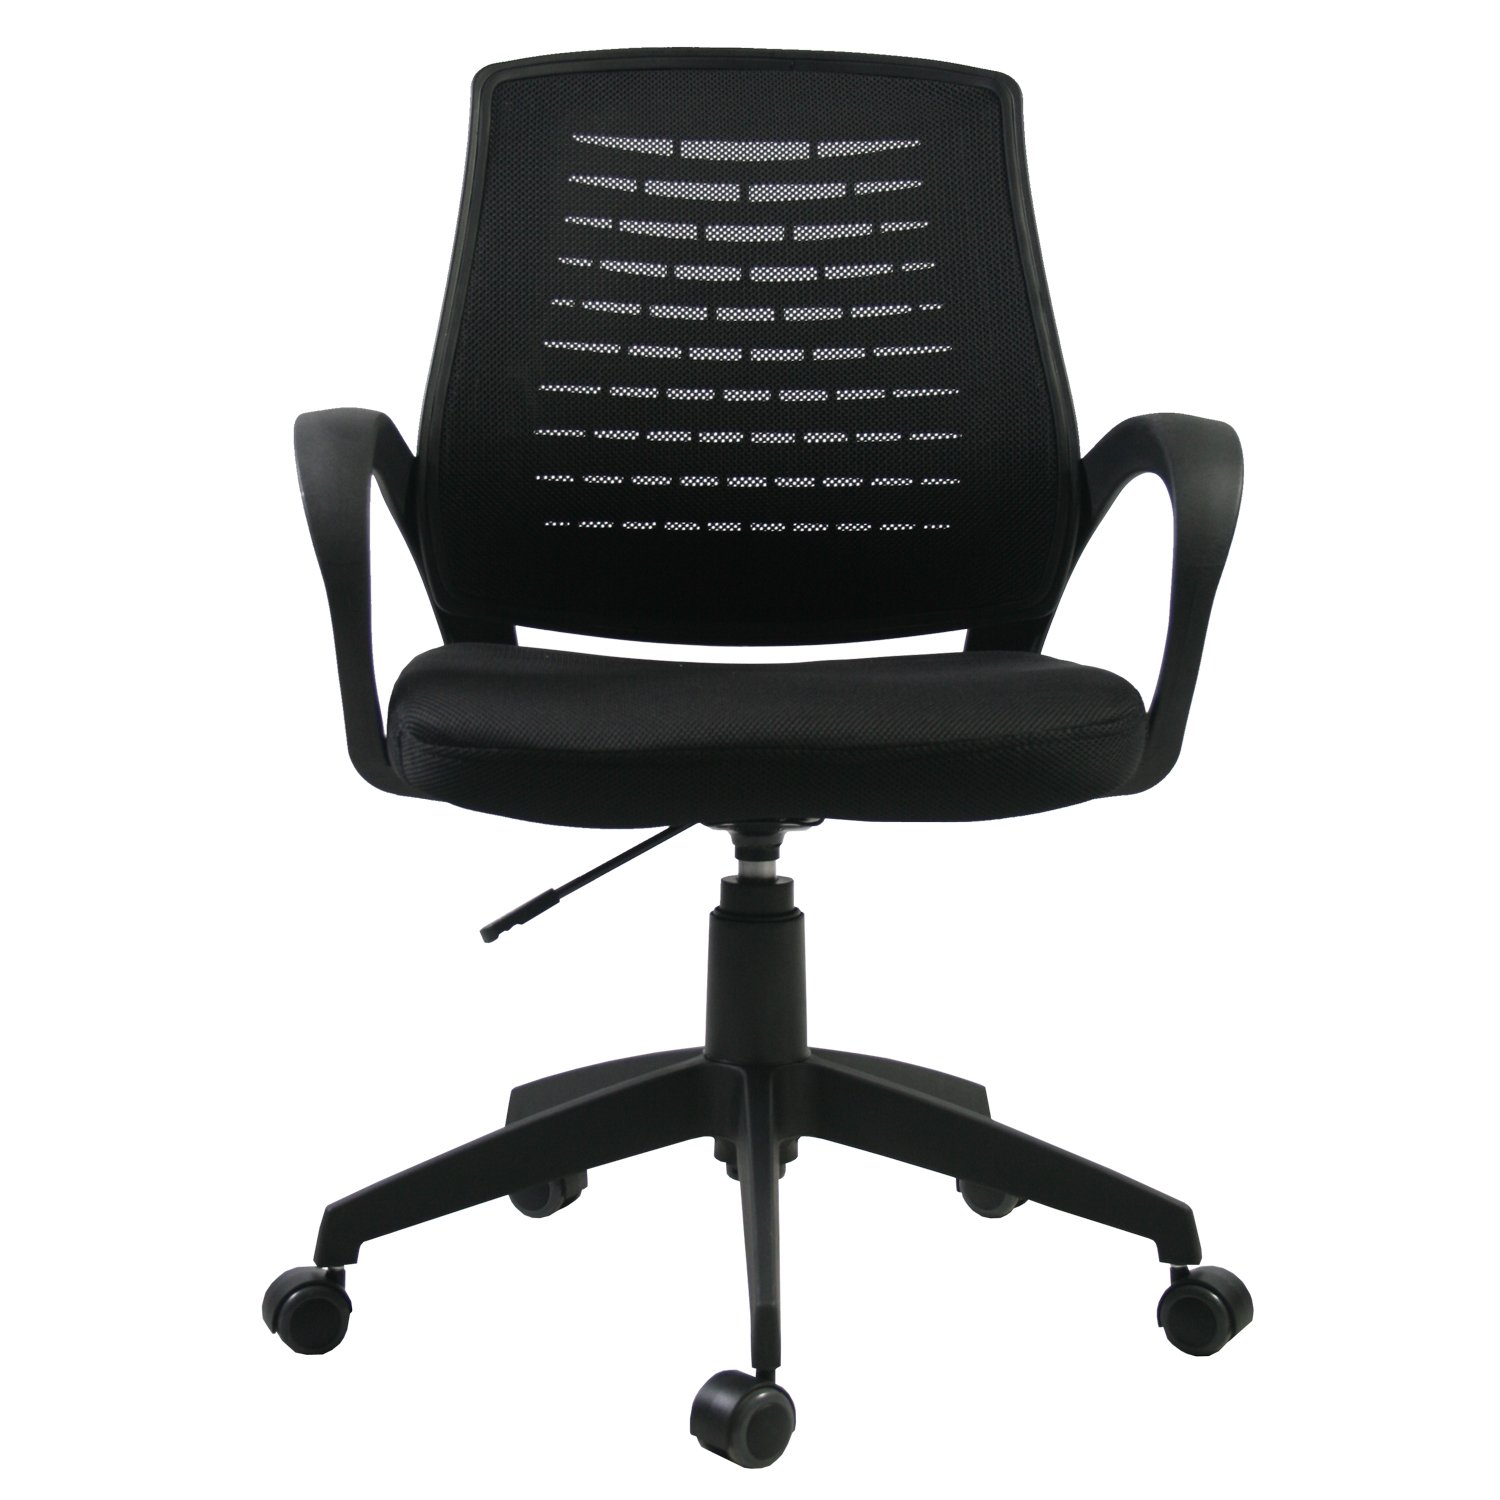 Biuro kėdė BRESCIA, 61,5x57x91-102 cm, juoda